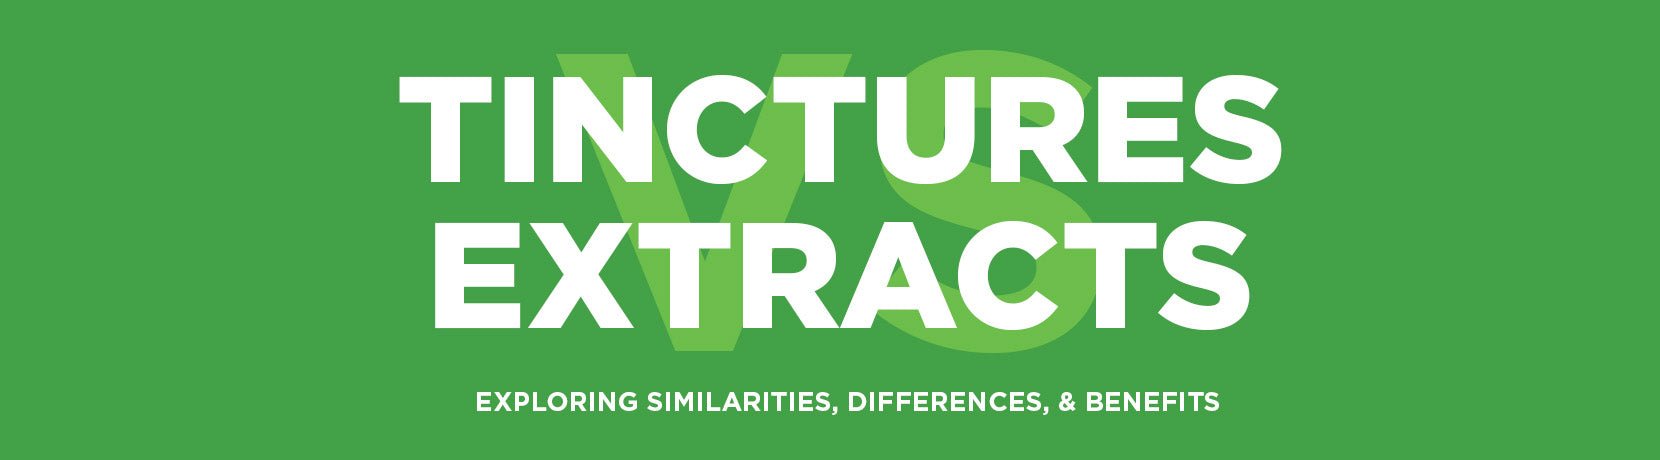 Tinctures vs Extracts: Exploring Similarities, Differences, & Benefits - Shop CBD Kratom